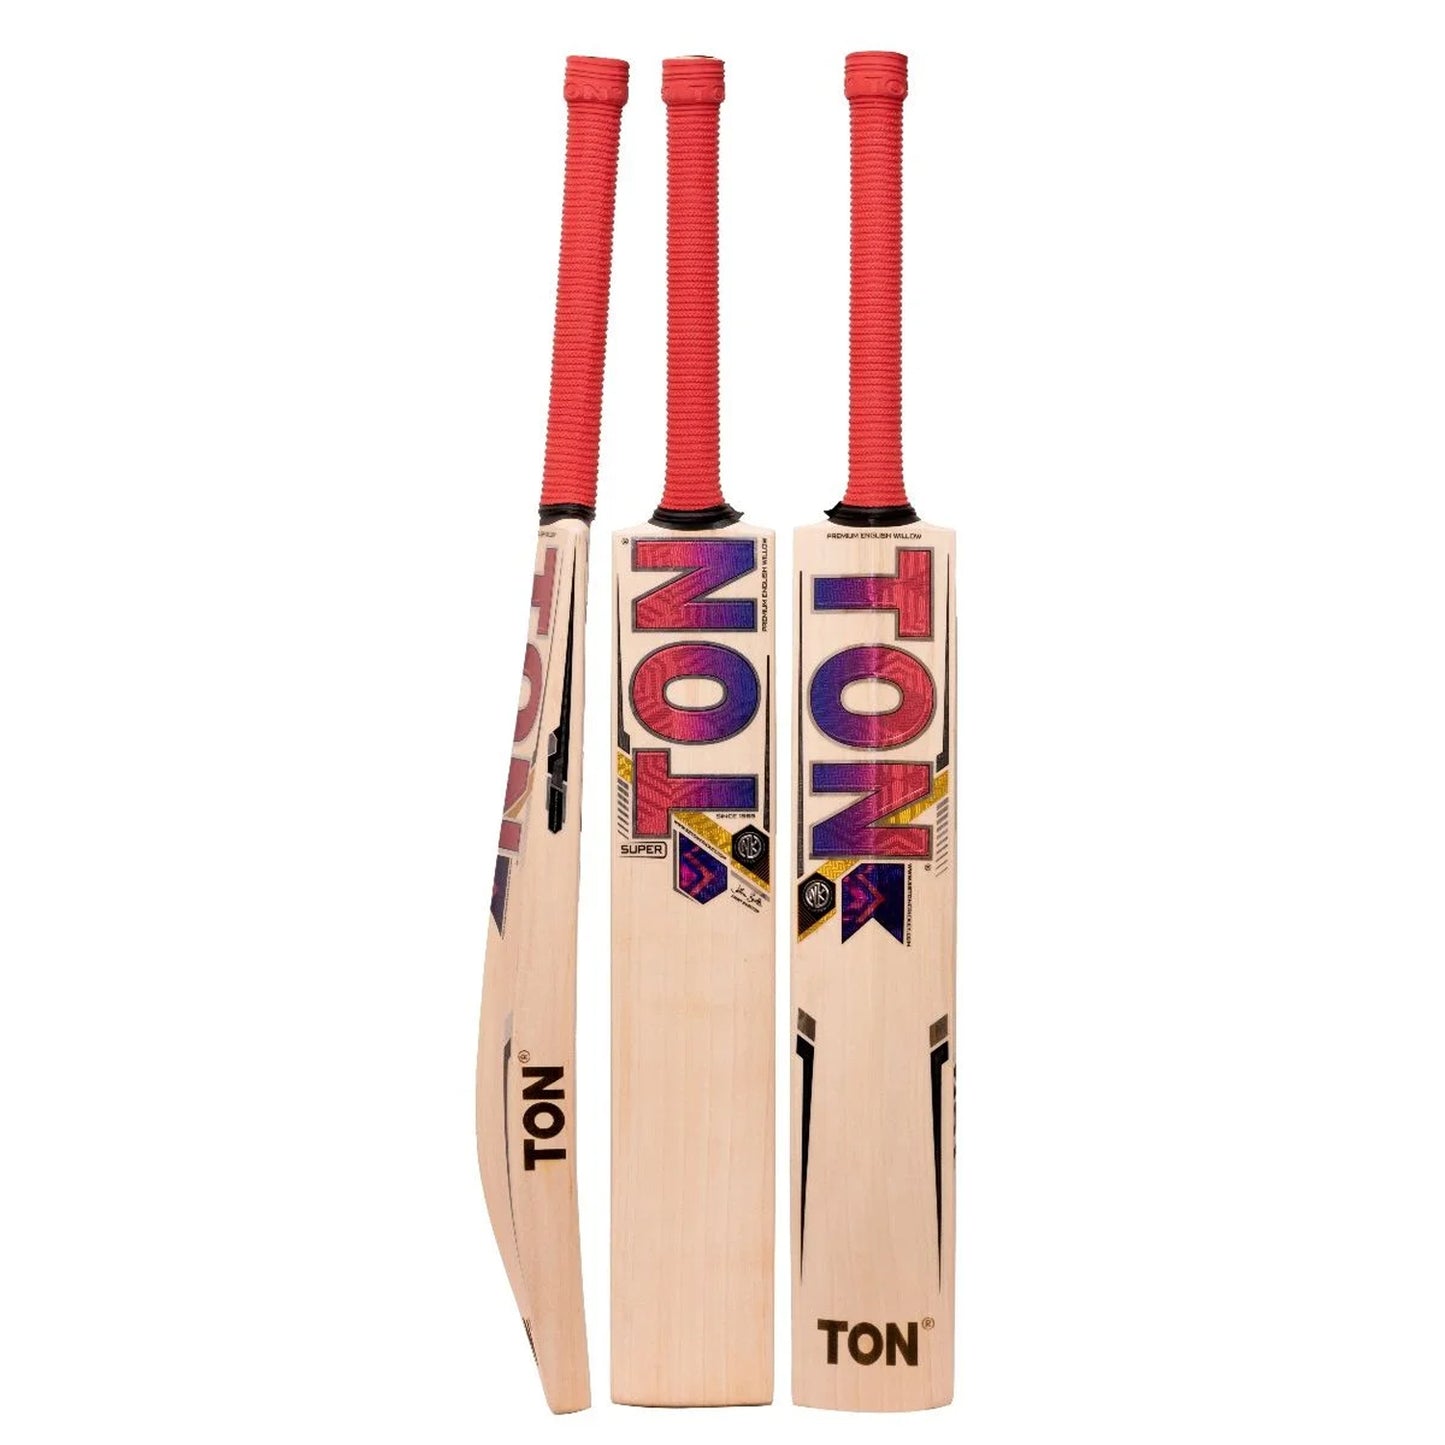 SS Ton Super Jonny Bairstow English Willow Cricket Bat - Best Price online Prokicksports.com